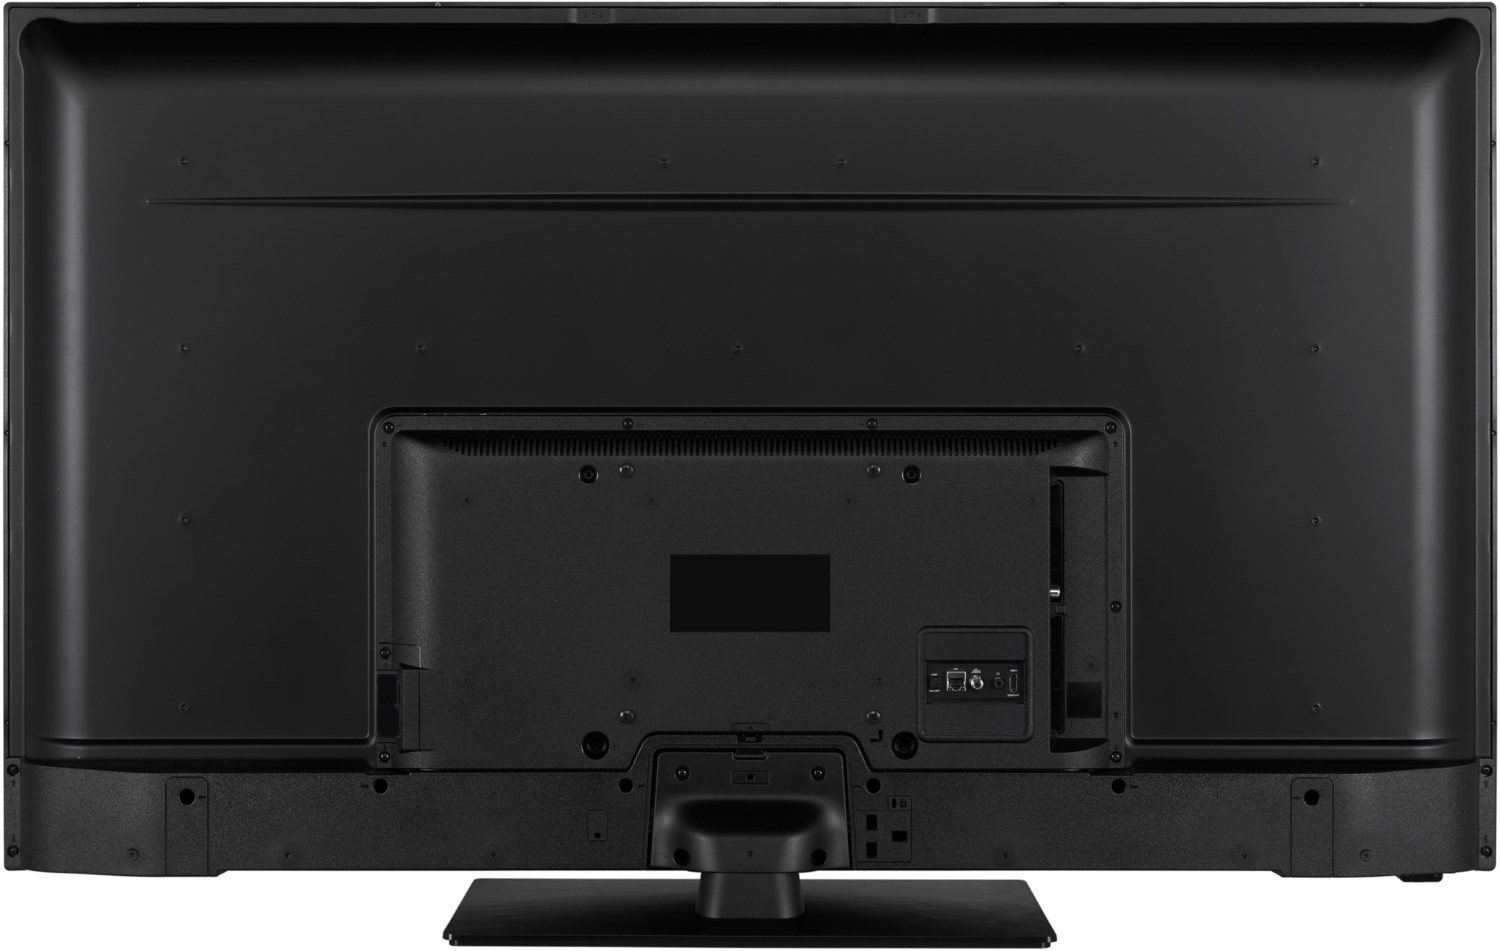 Panasonic LCD-TV 55 Zoll (139 cm) mit LED-Technik 4k UHD glossy black